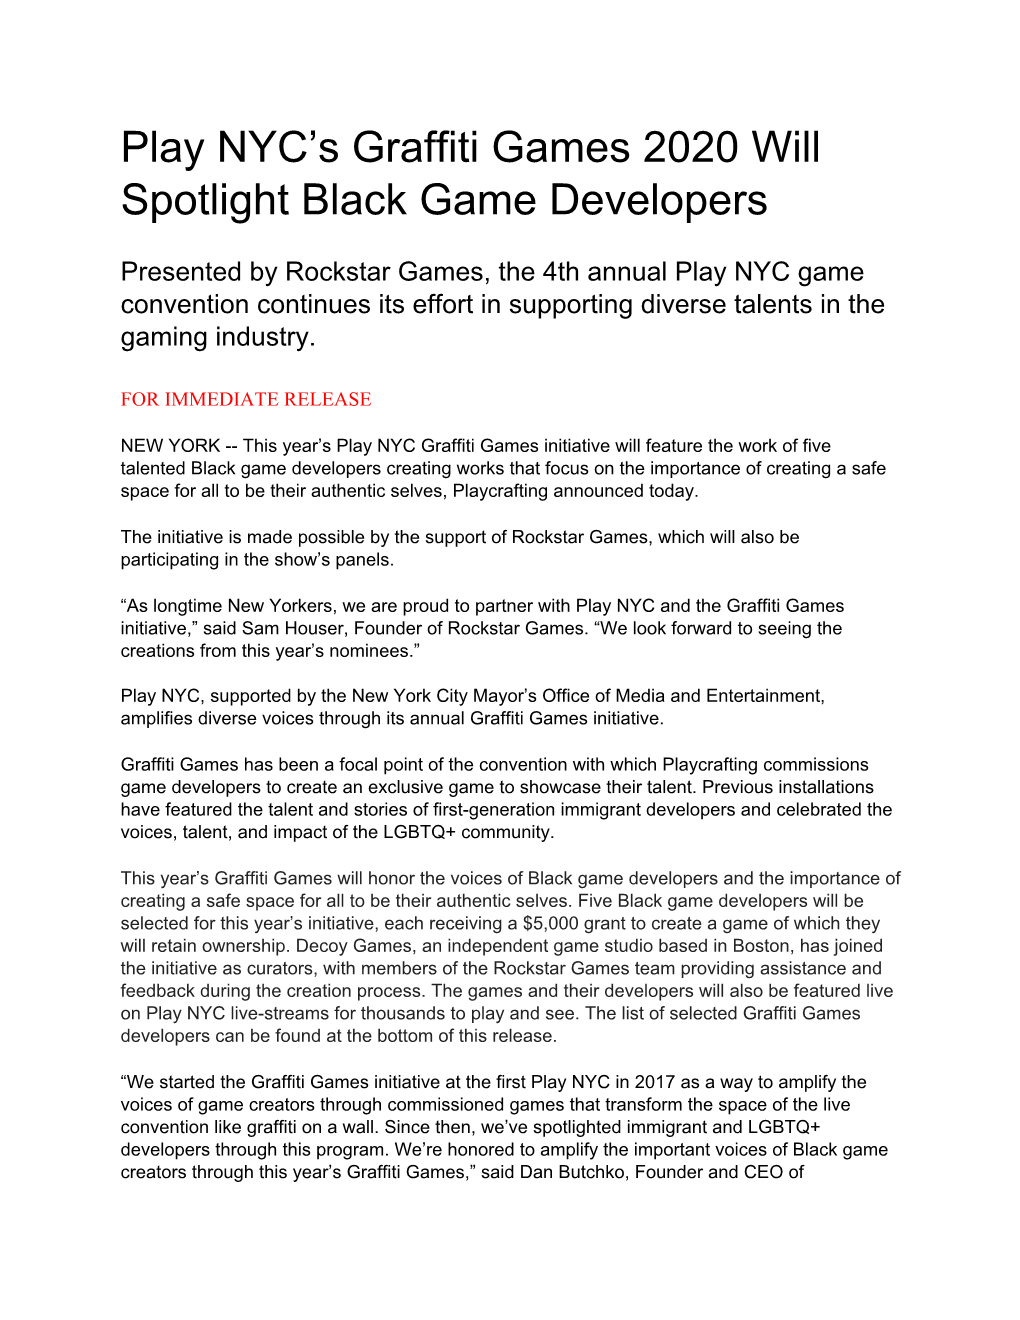 Play NYC's Graffiti Games 2020 Will Spotlight Black Game Developers